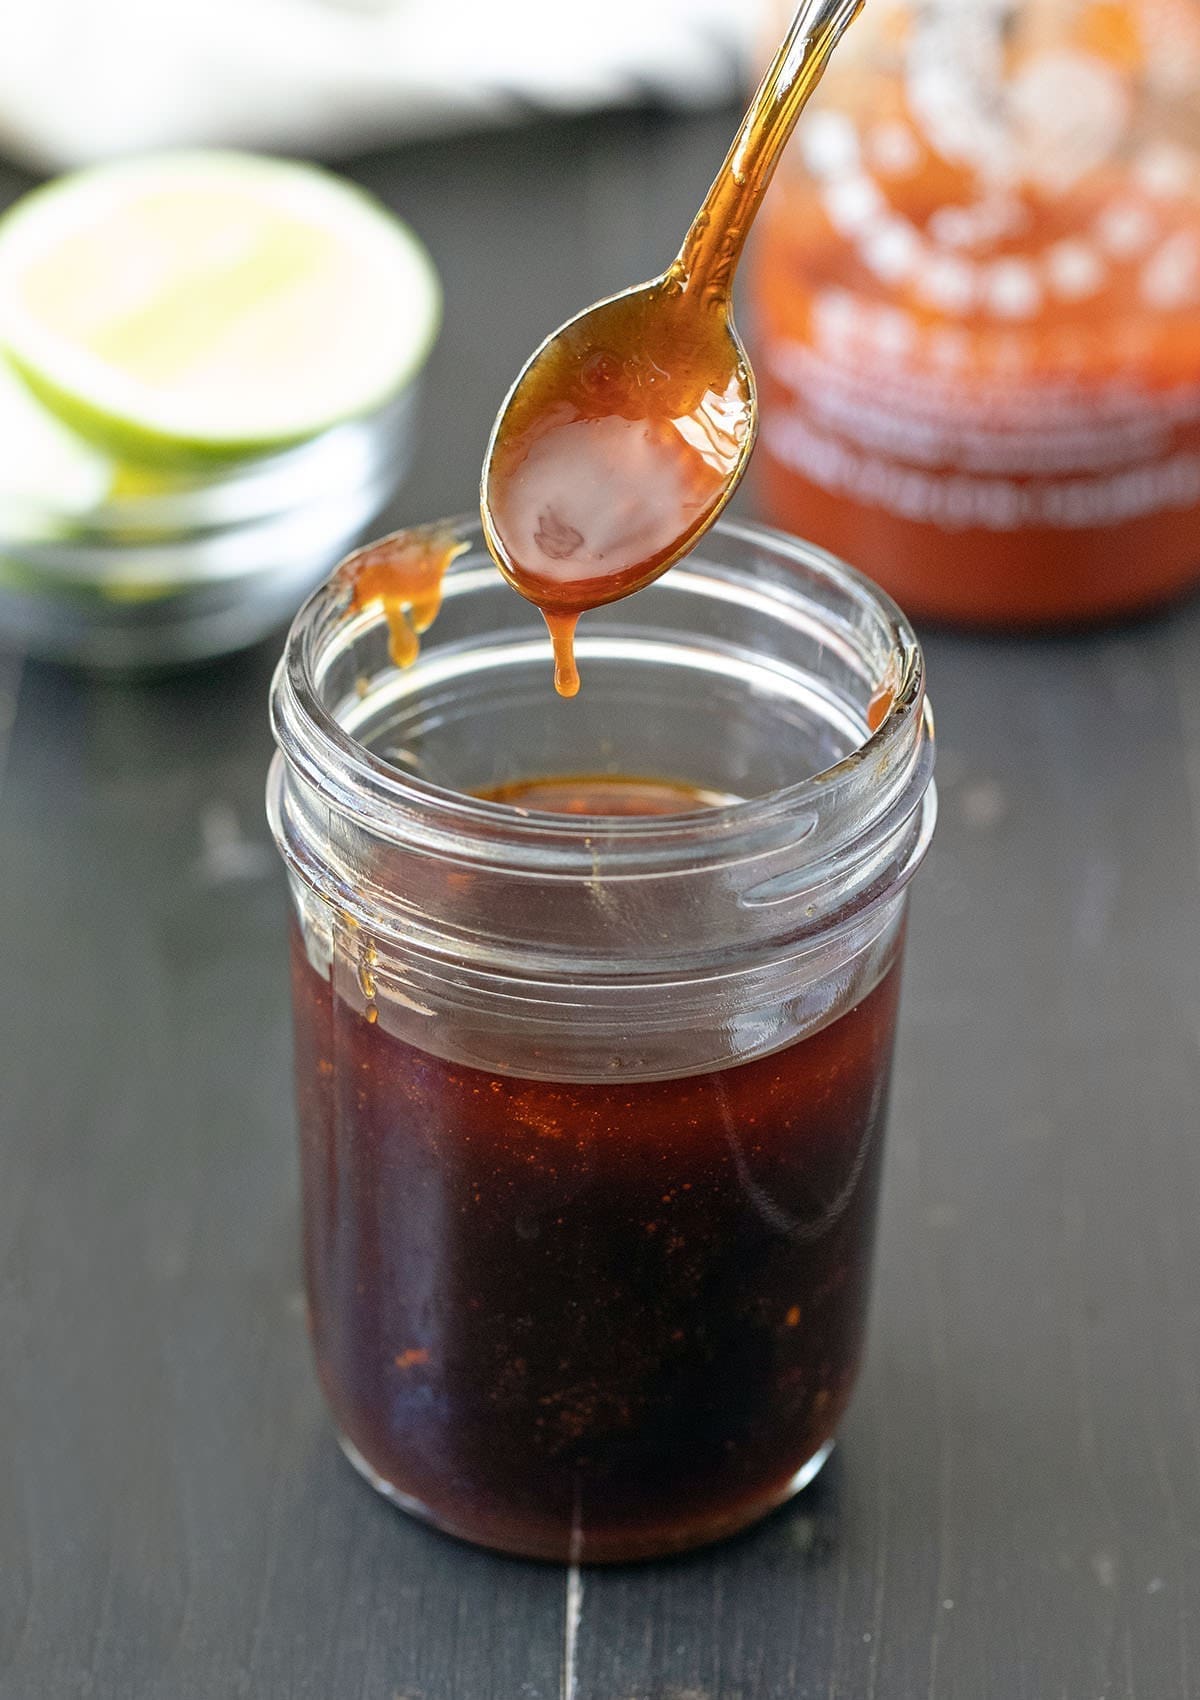 Spoon dipped in Honey Sriracha Sauce.